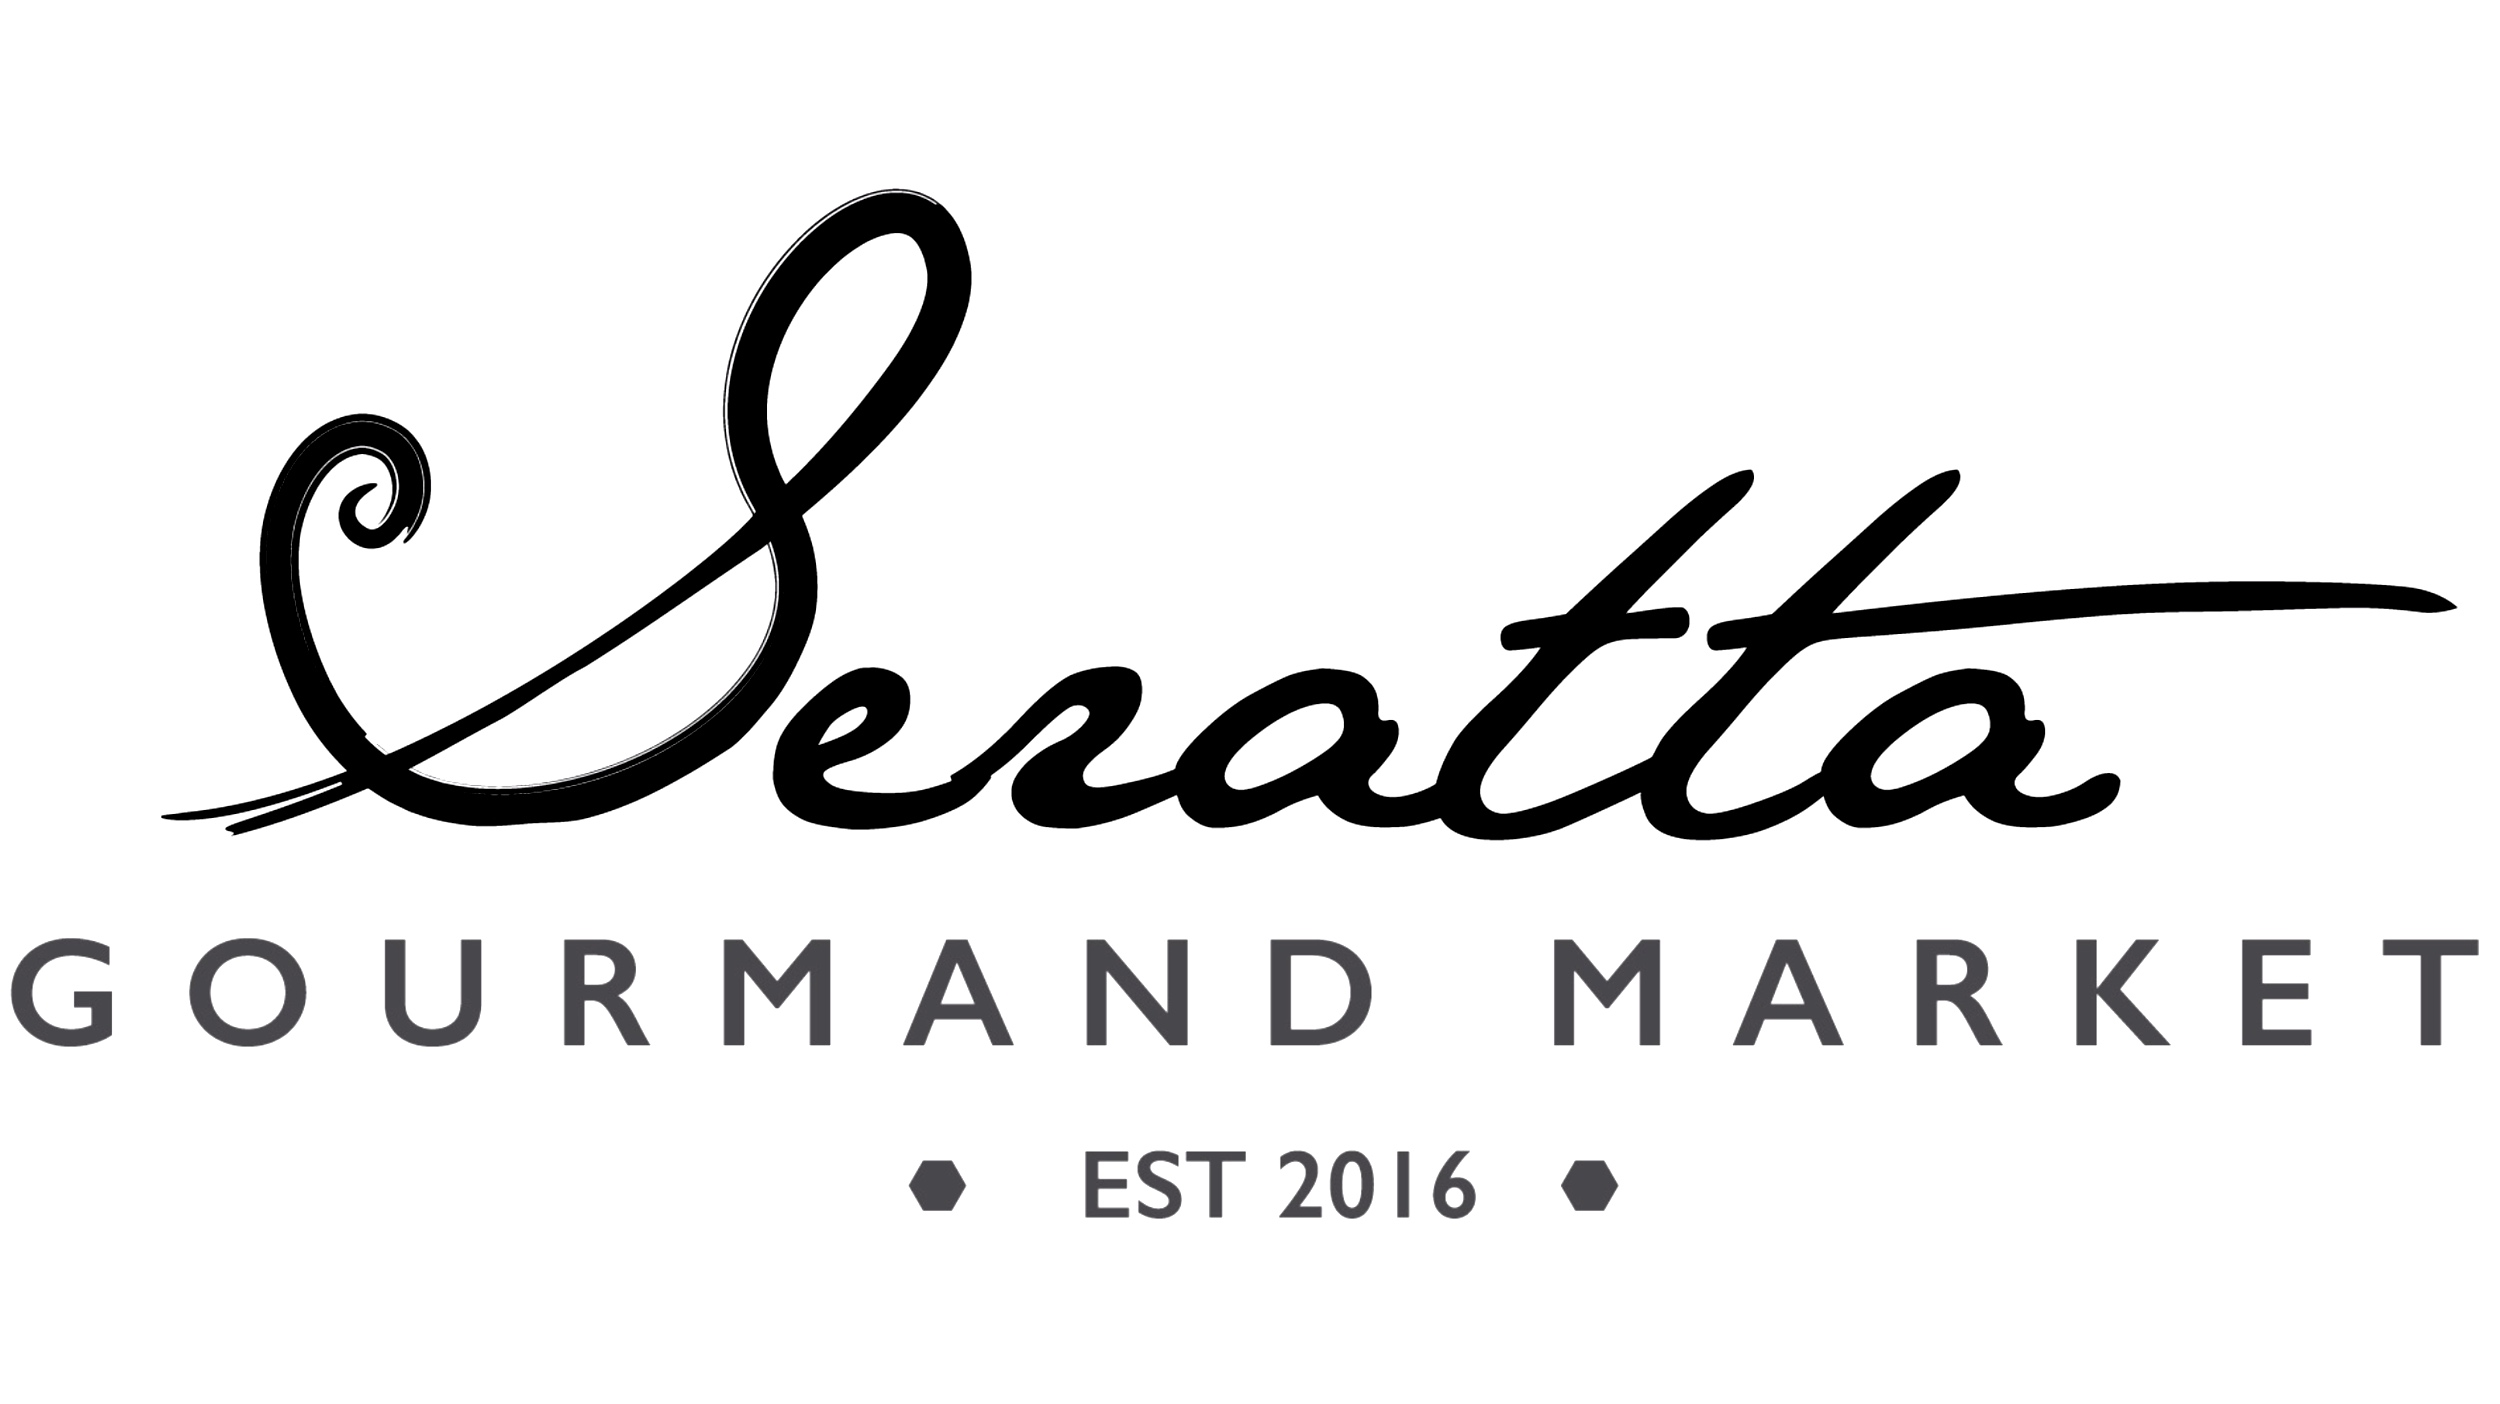 Seratta Gourmand Market